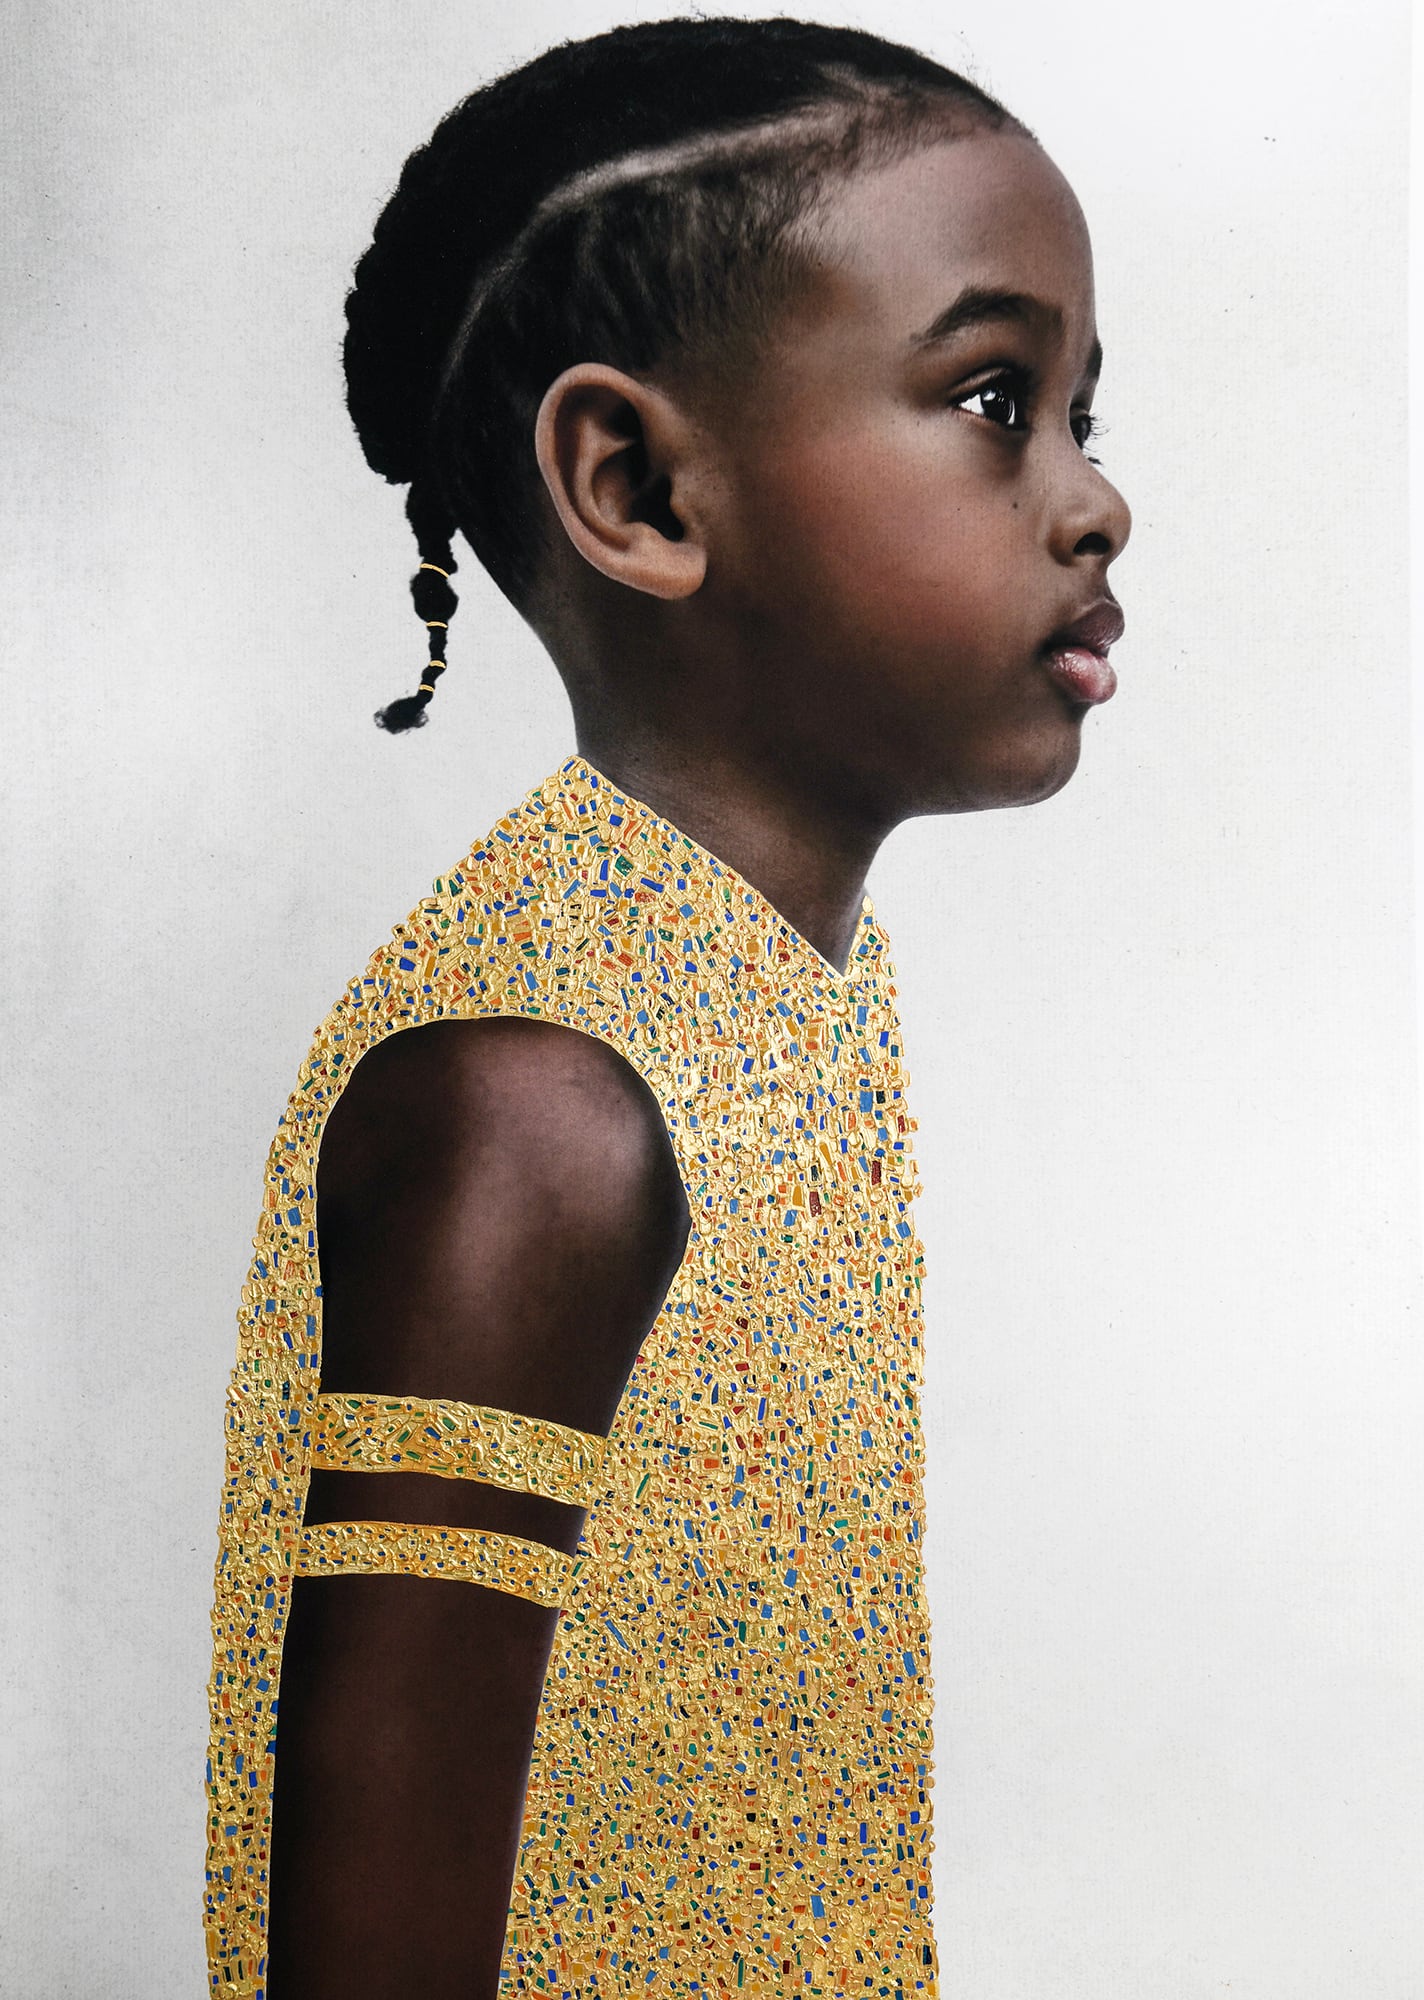 retrato fotografico de niño negro con trenzas con vestido dorado tipo klimt por tawny chatmon